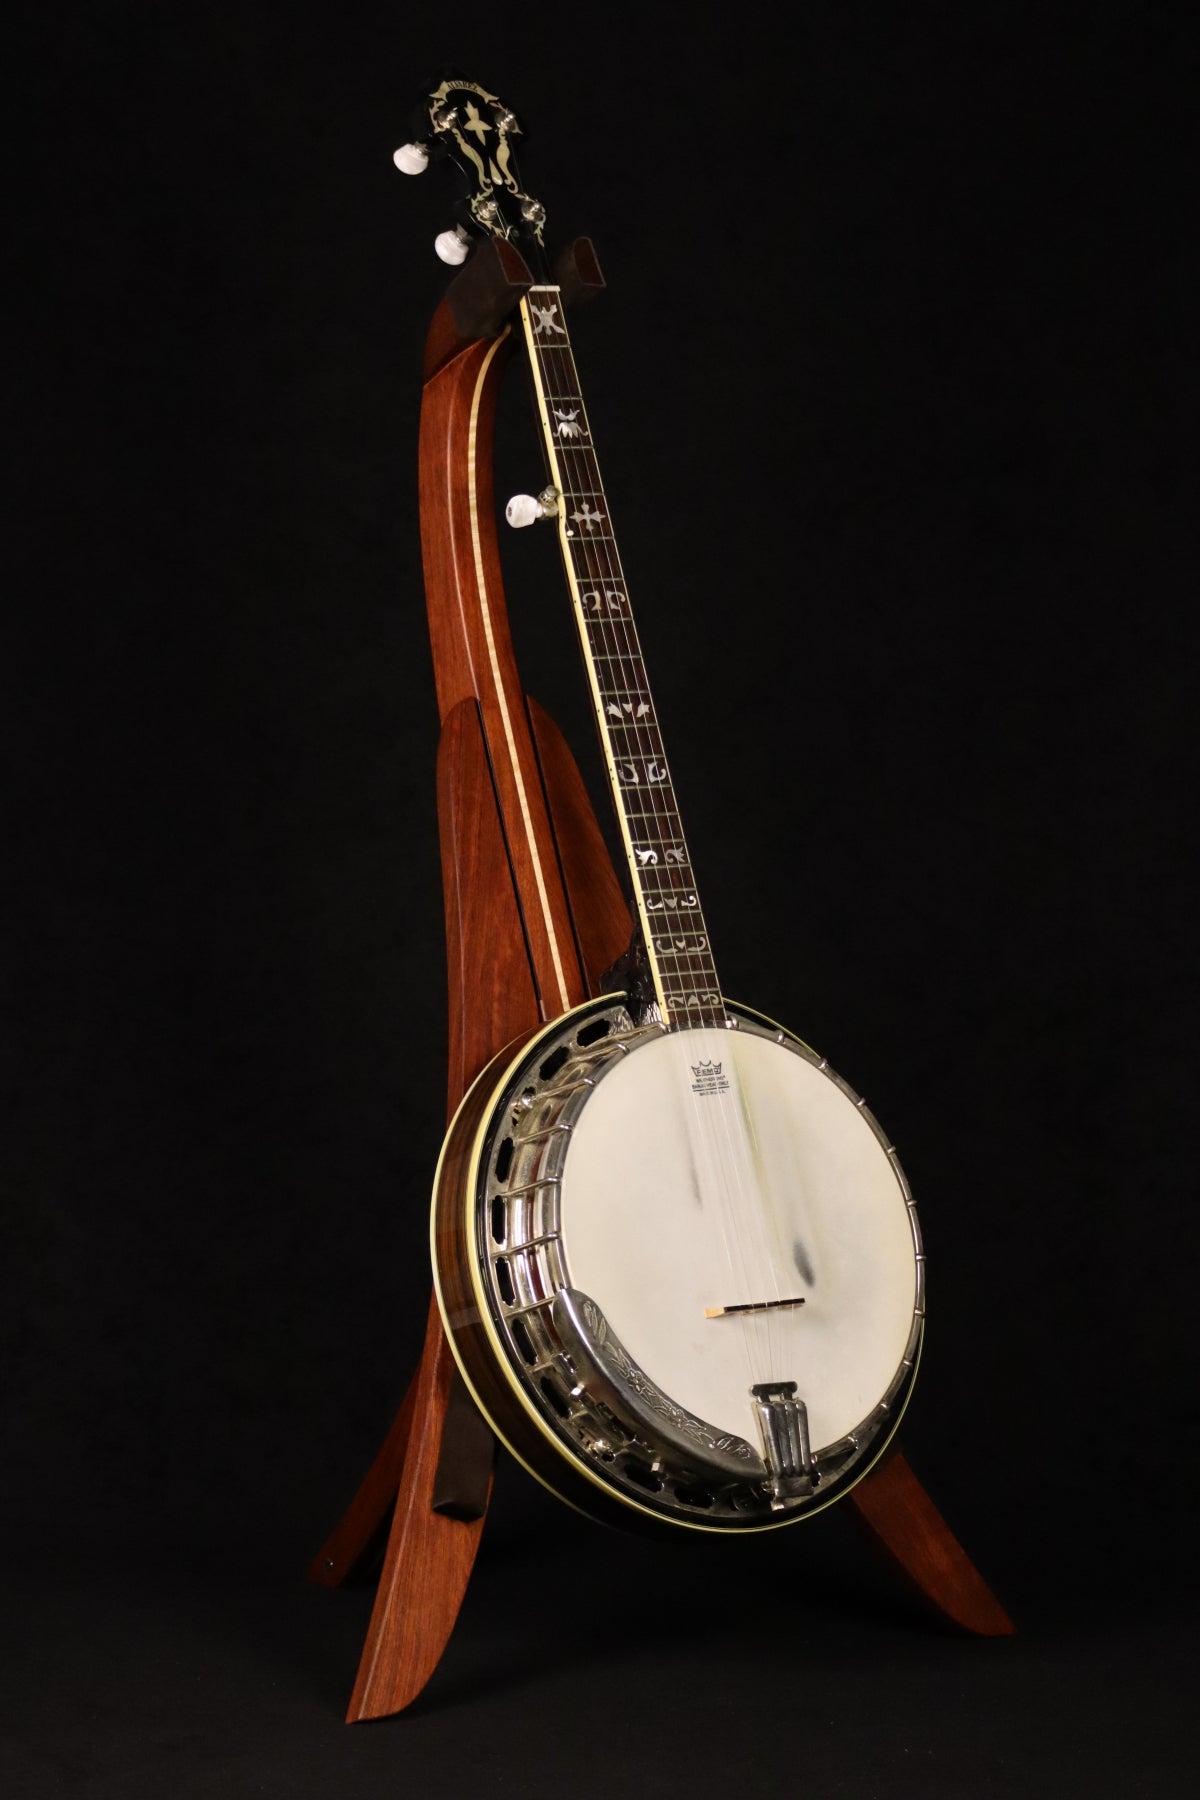 Folding bubinga rosewood and curly maple wood banjo floor stand full front image with Alvarez banjo